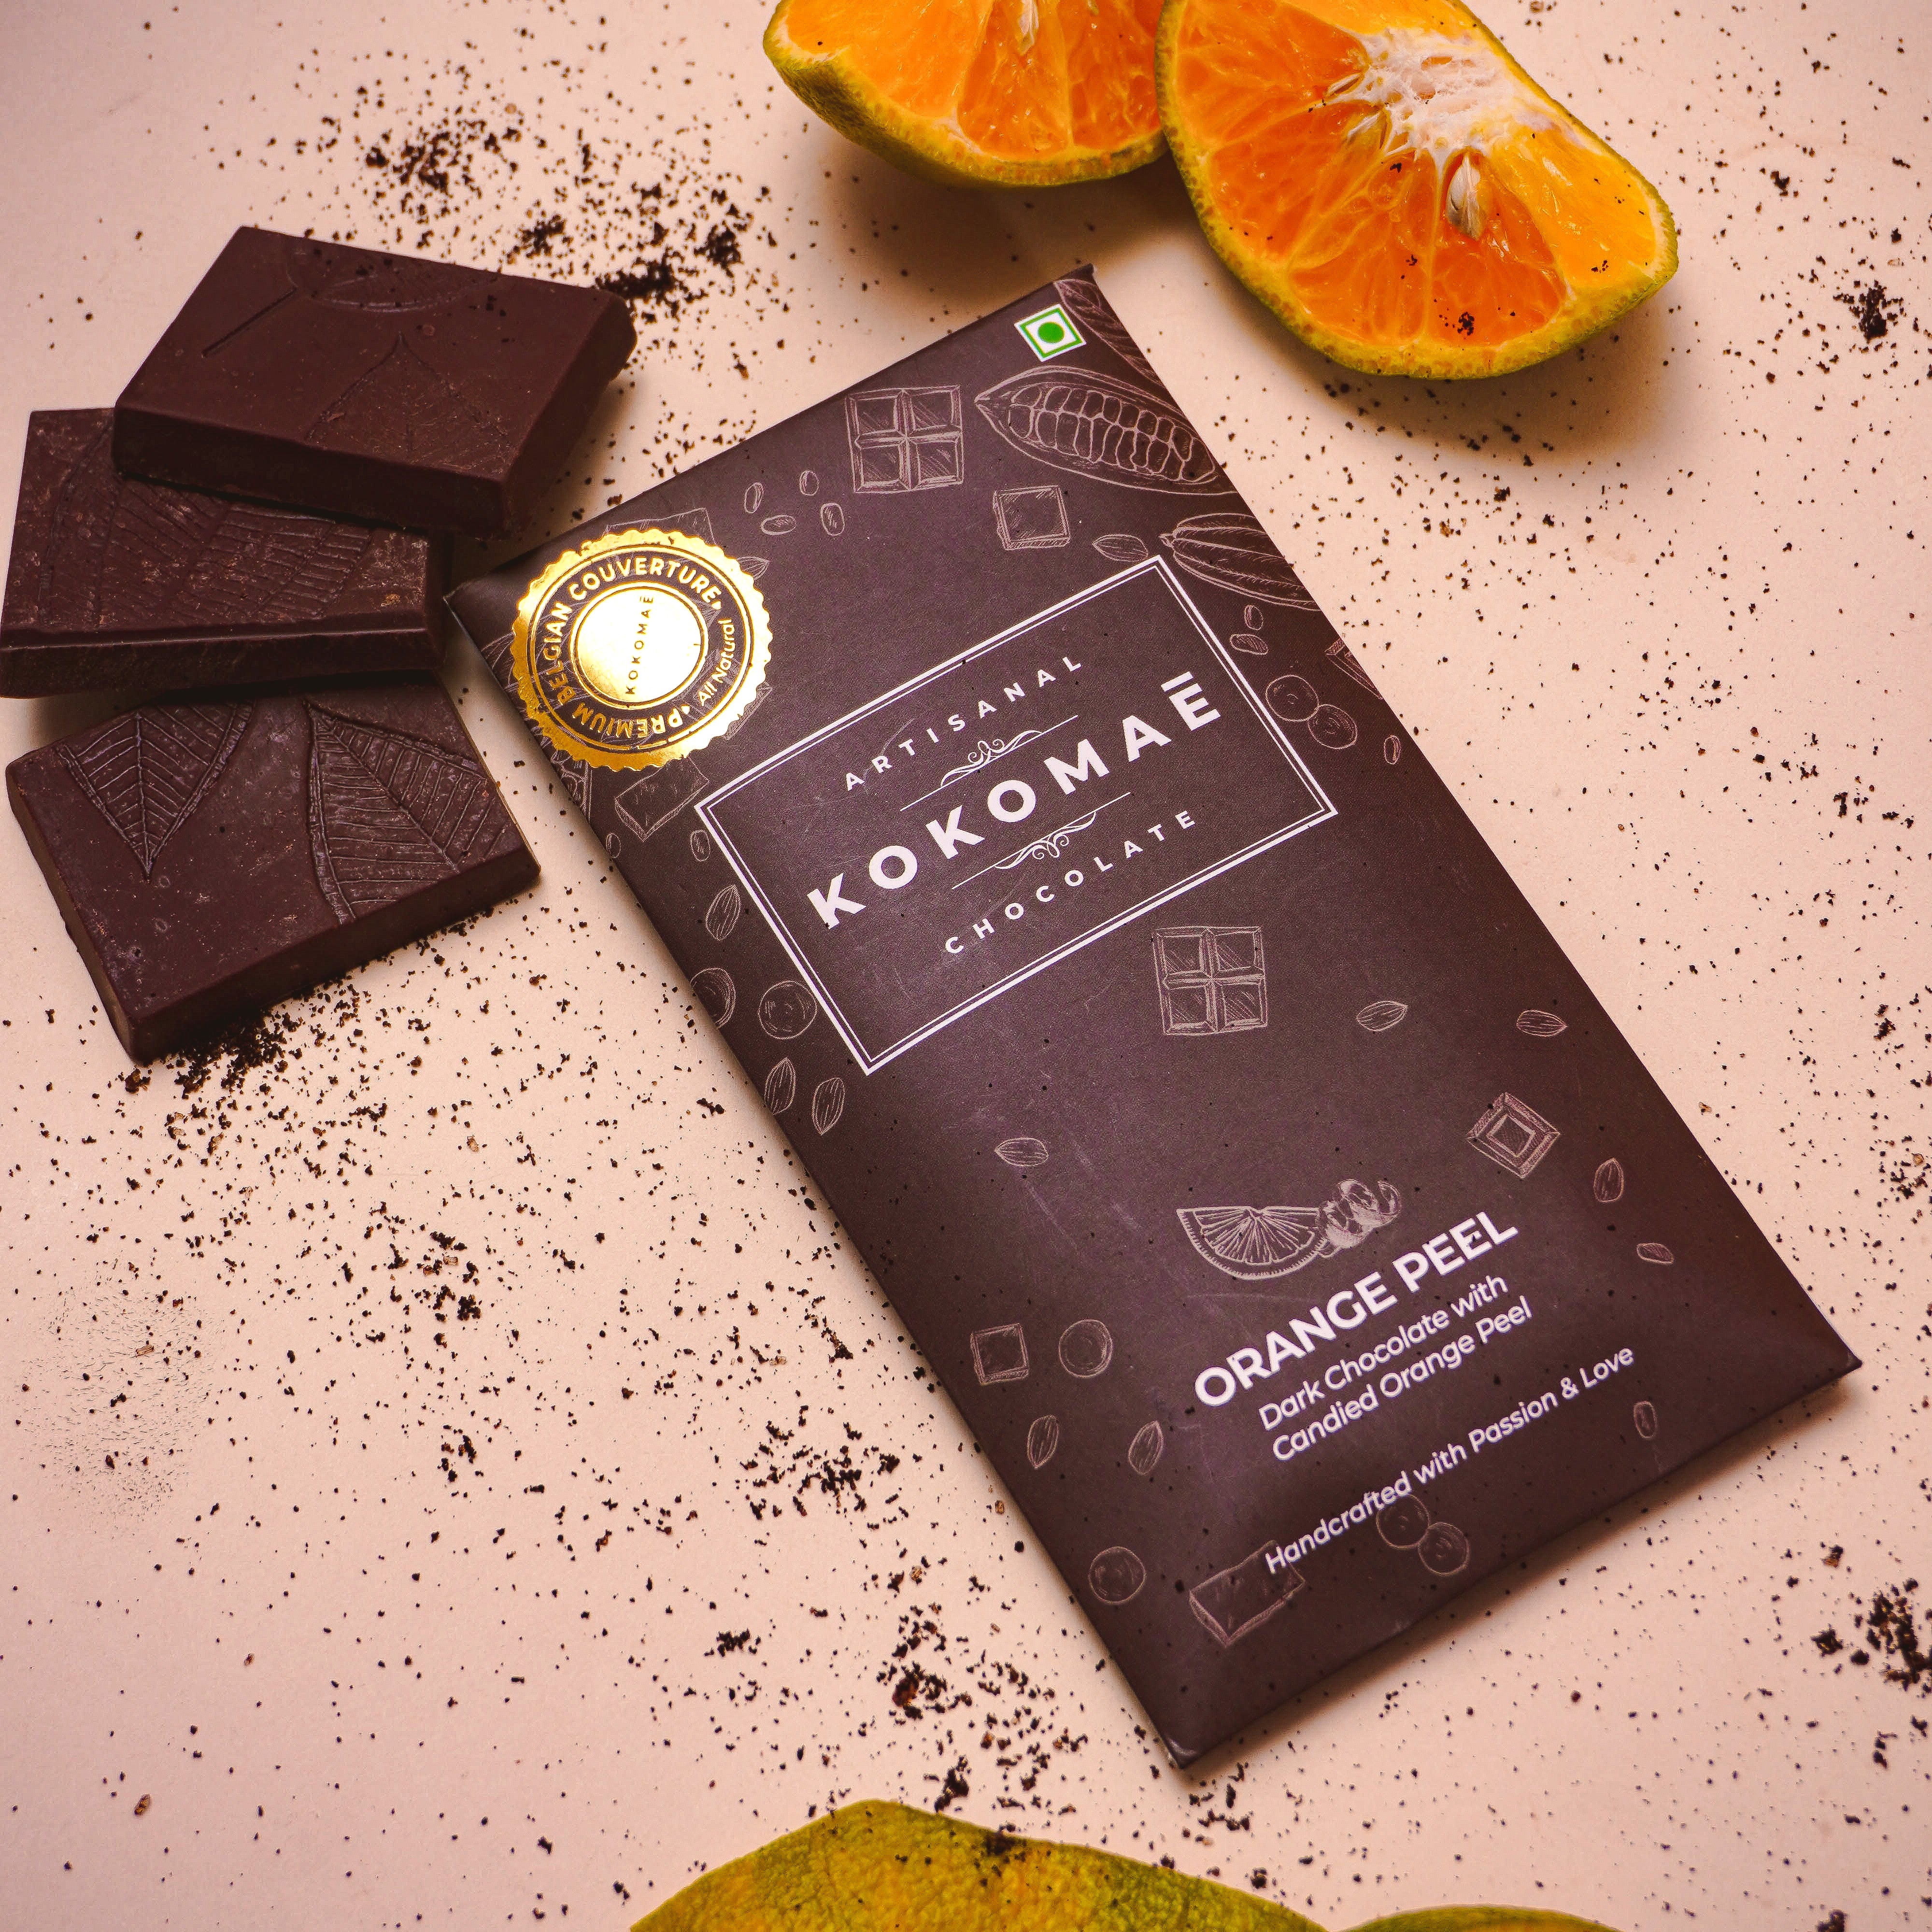 Kokomaē Belgian Pure Couverture Premium Dark Chocolate Bar with Premium Candied Orange Peel